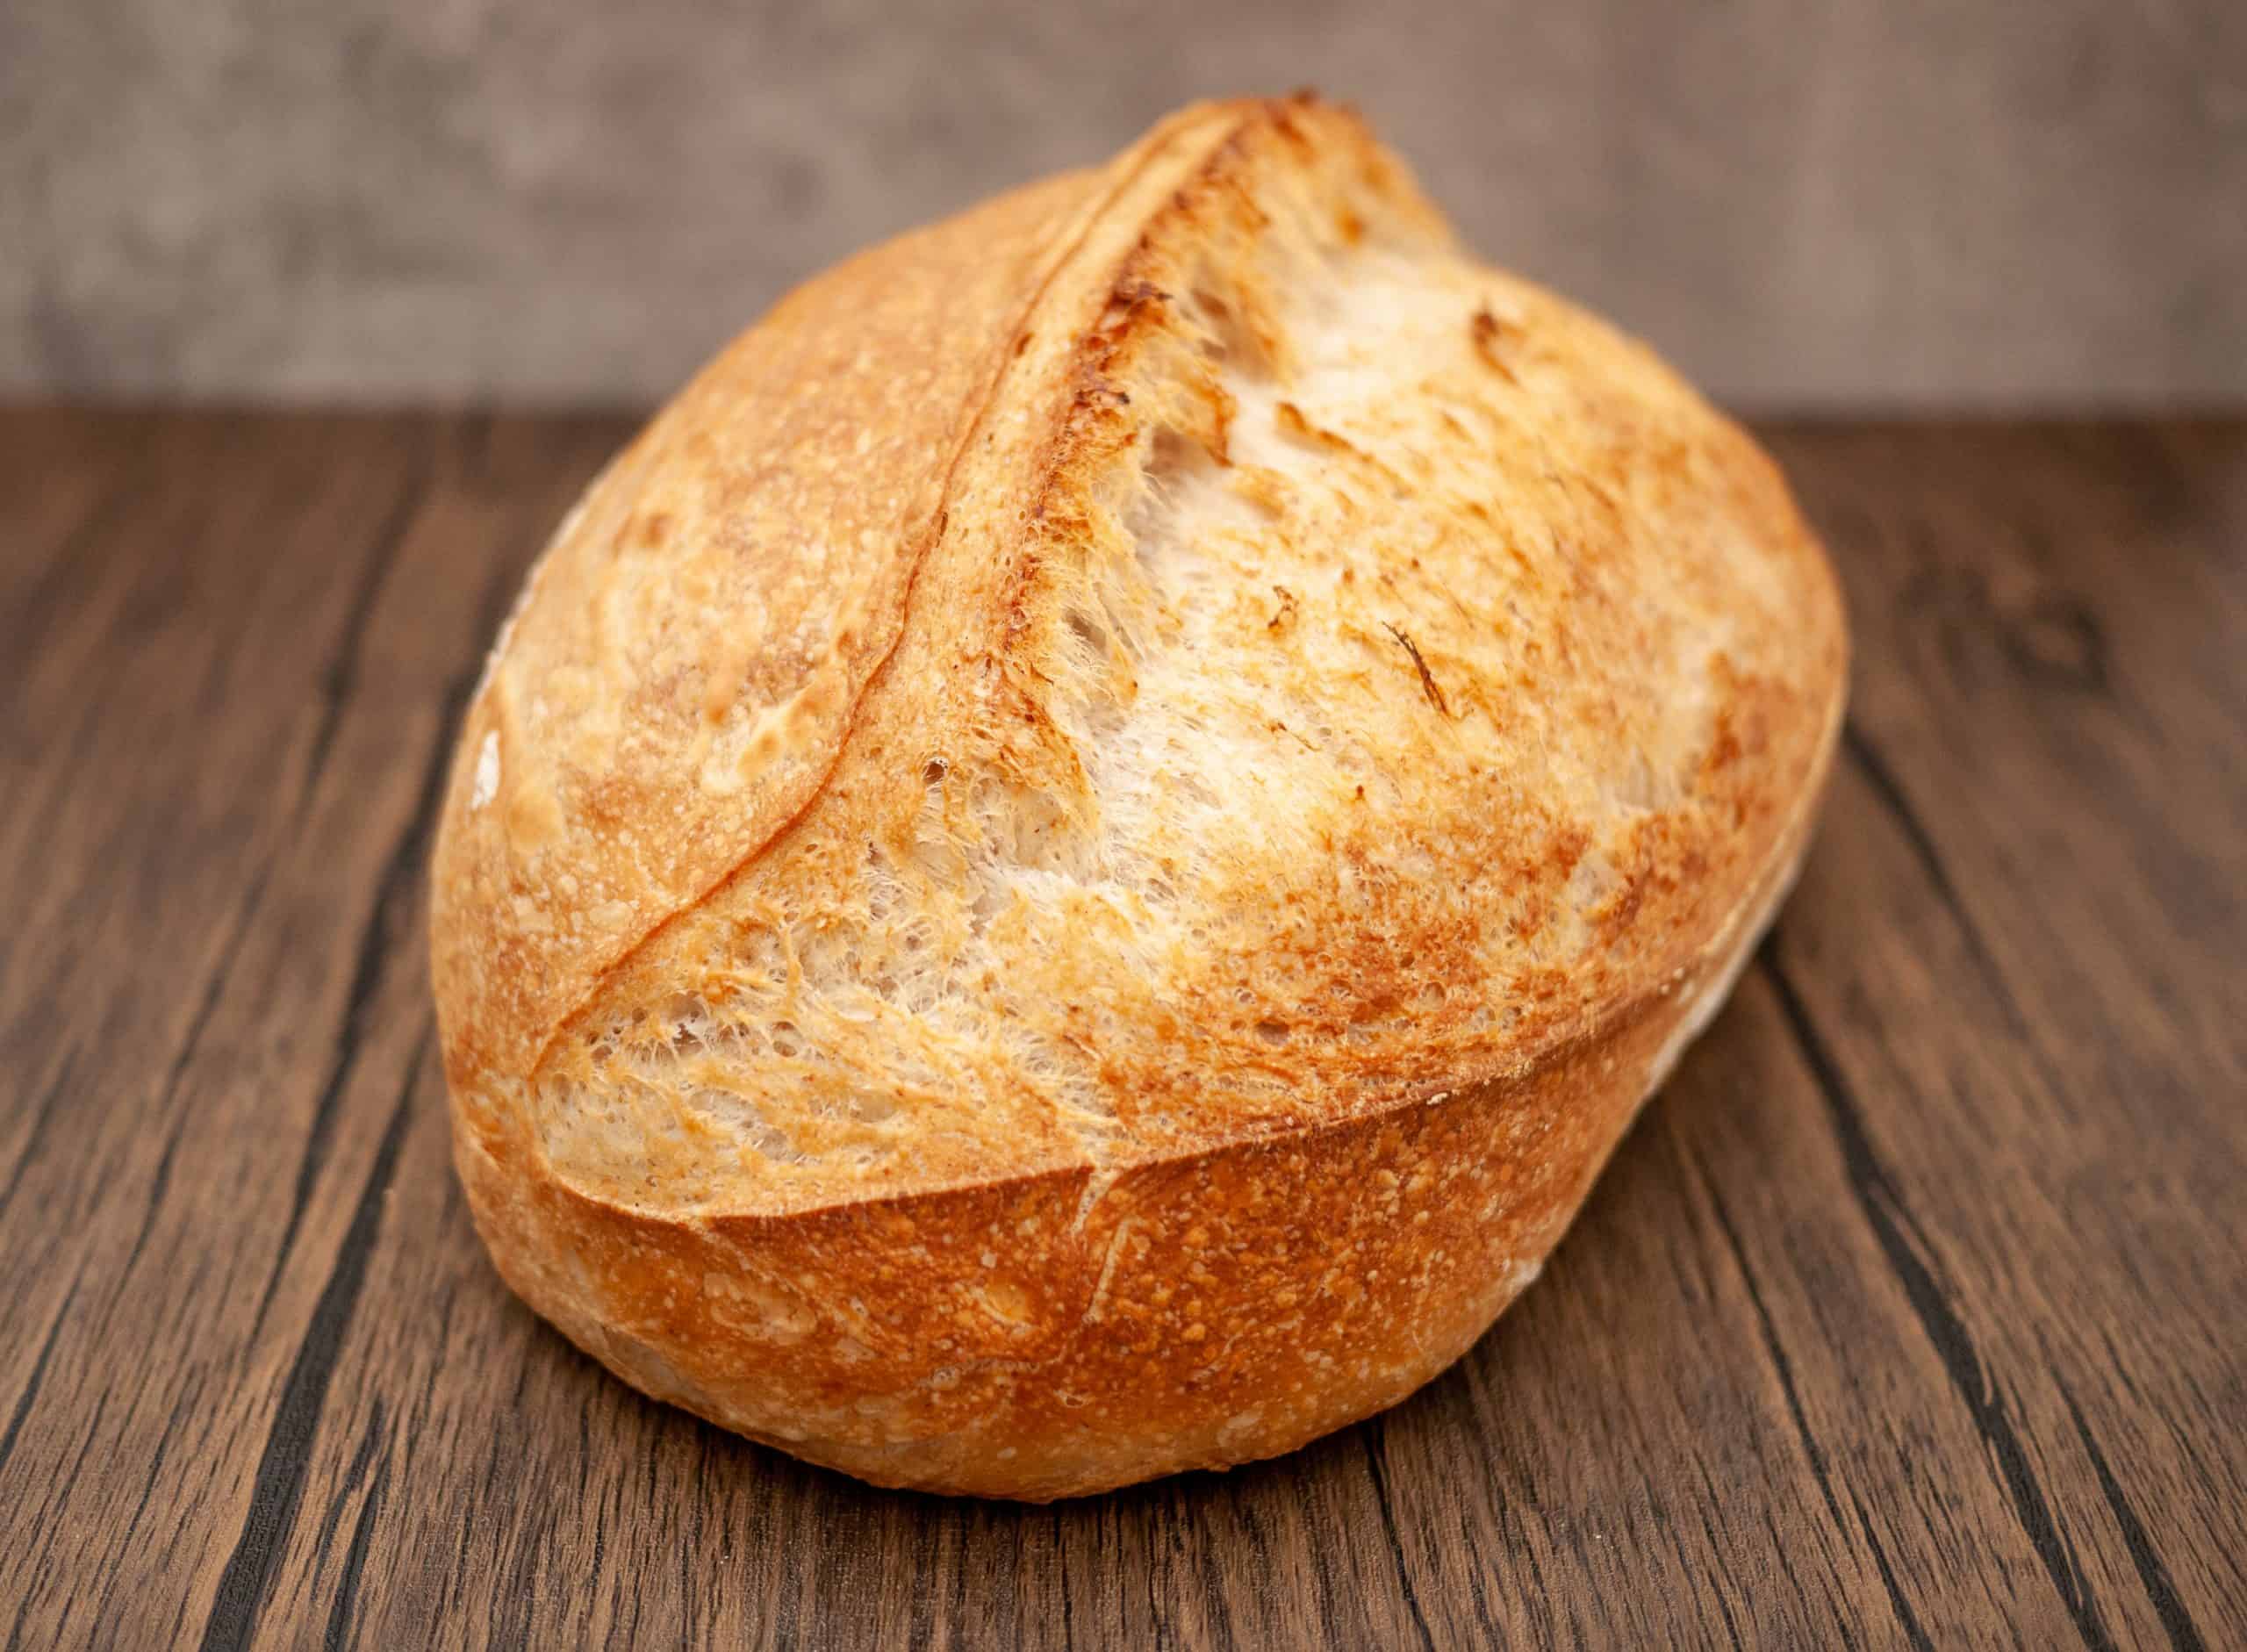 https://www.mygreekdish.com/wp-content/uploads/2021/03/Easy-Sourdough-Bread-recipe-with-Starter-prozimi-scaled.jpg